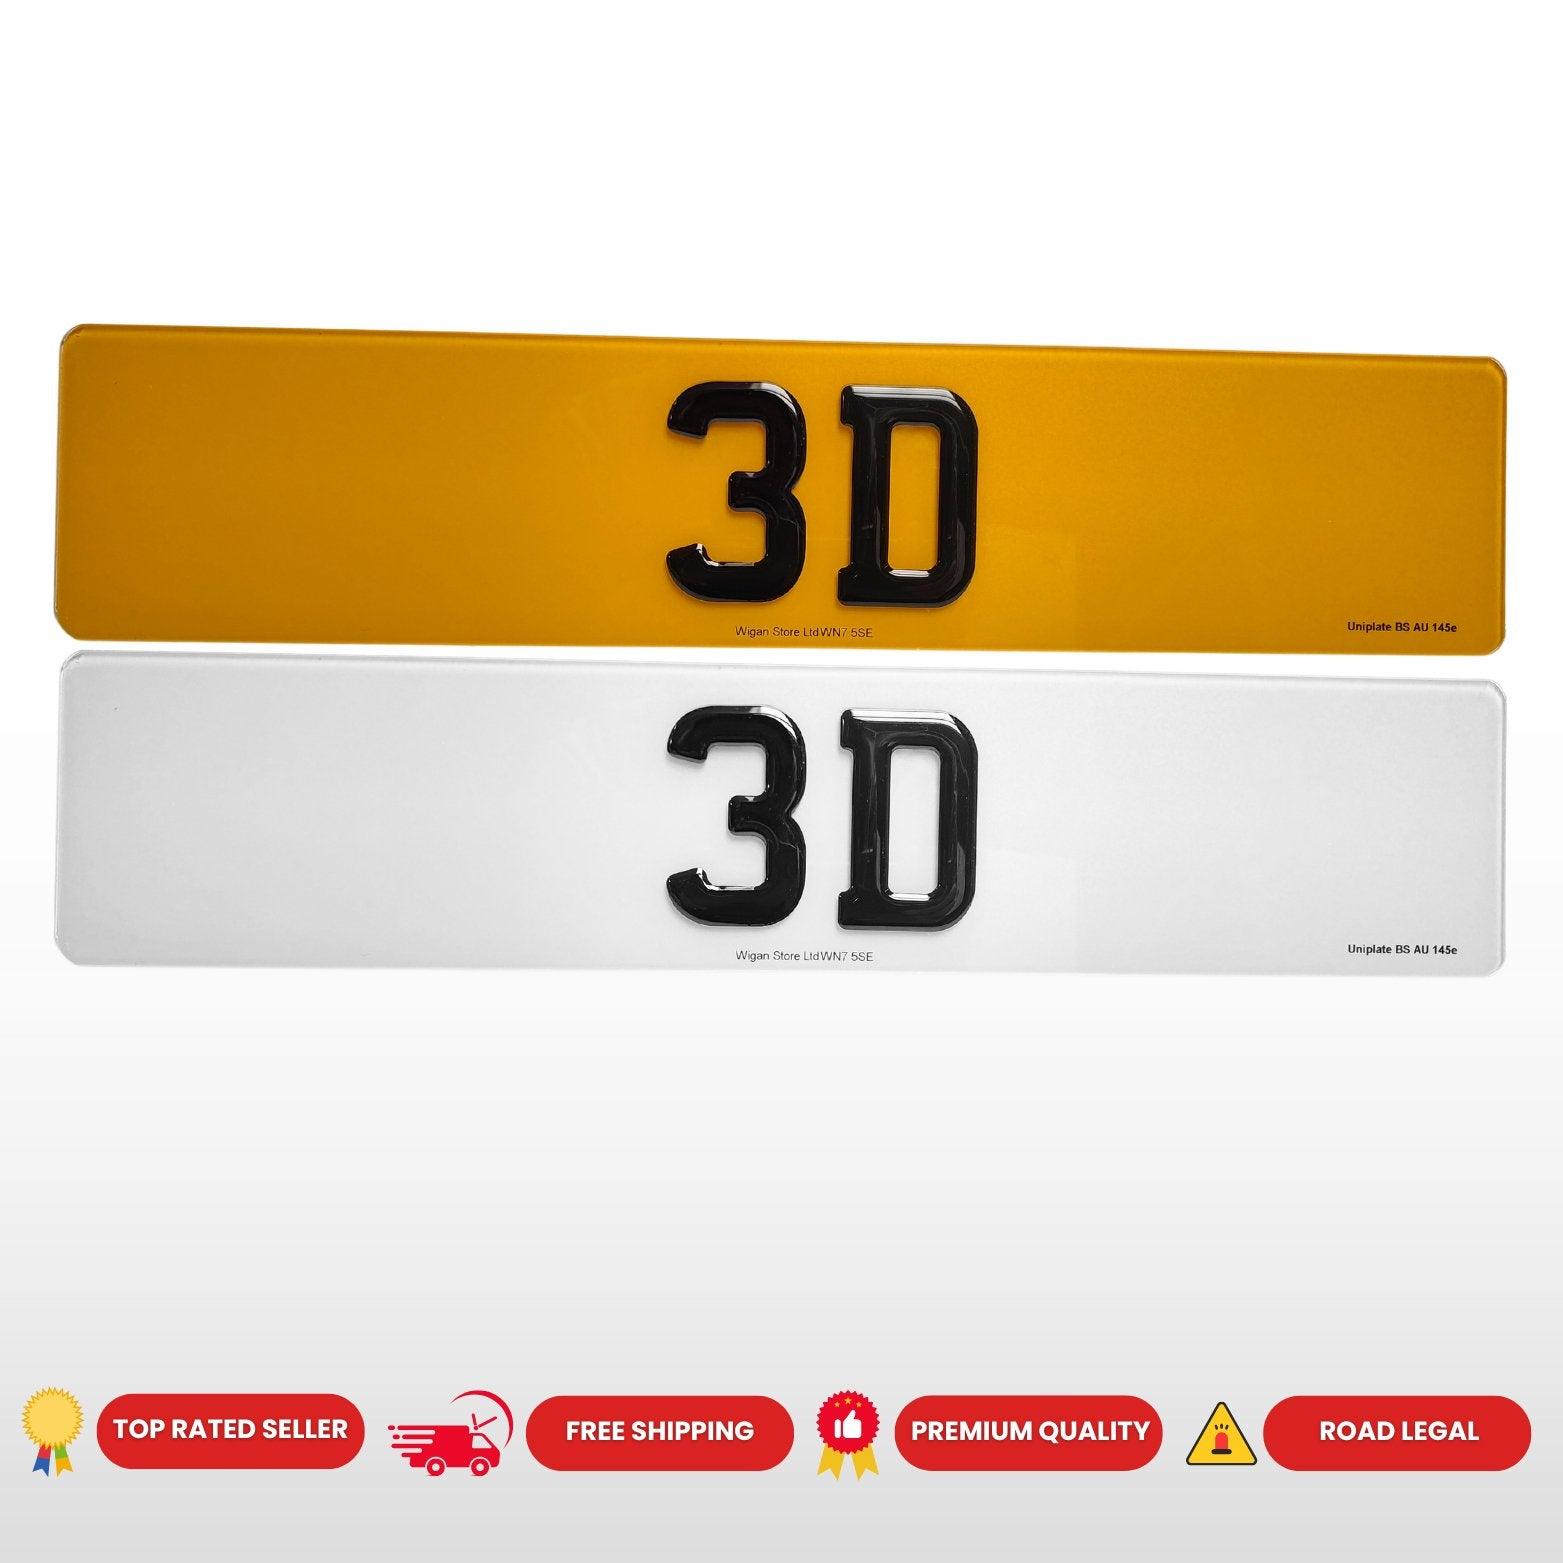 3D Gel Gloss Black Road Legal Number Plates, MOT Friendly, 520mm x 111mm, Standard Oblong 3d gel number plate, Oralite or Nikalite Branded, Car/Van/Trailer Number Plate